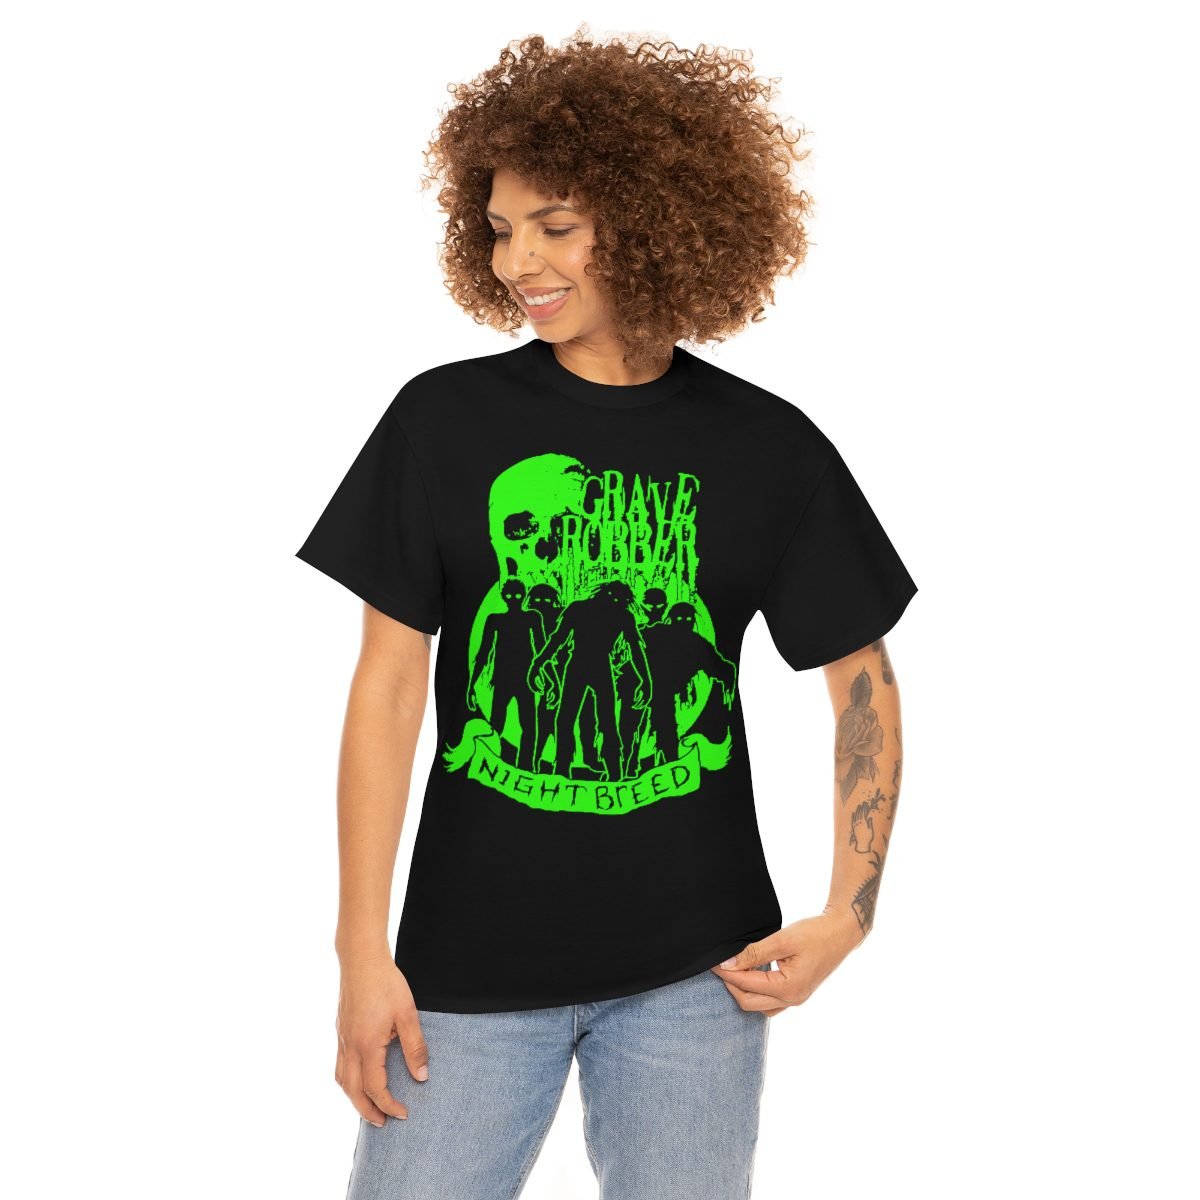 Grave Robber – Night Breed Green Short Sleeve Tshirt (5000)